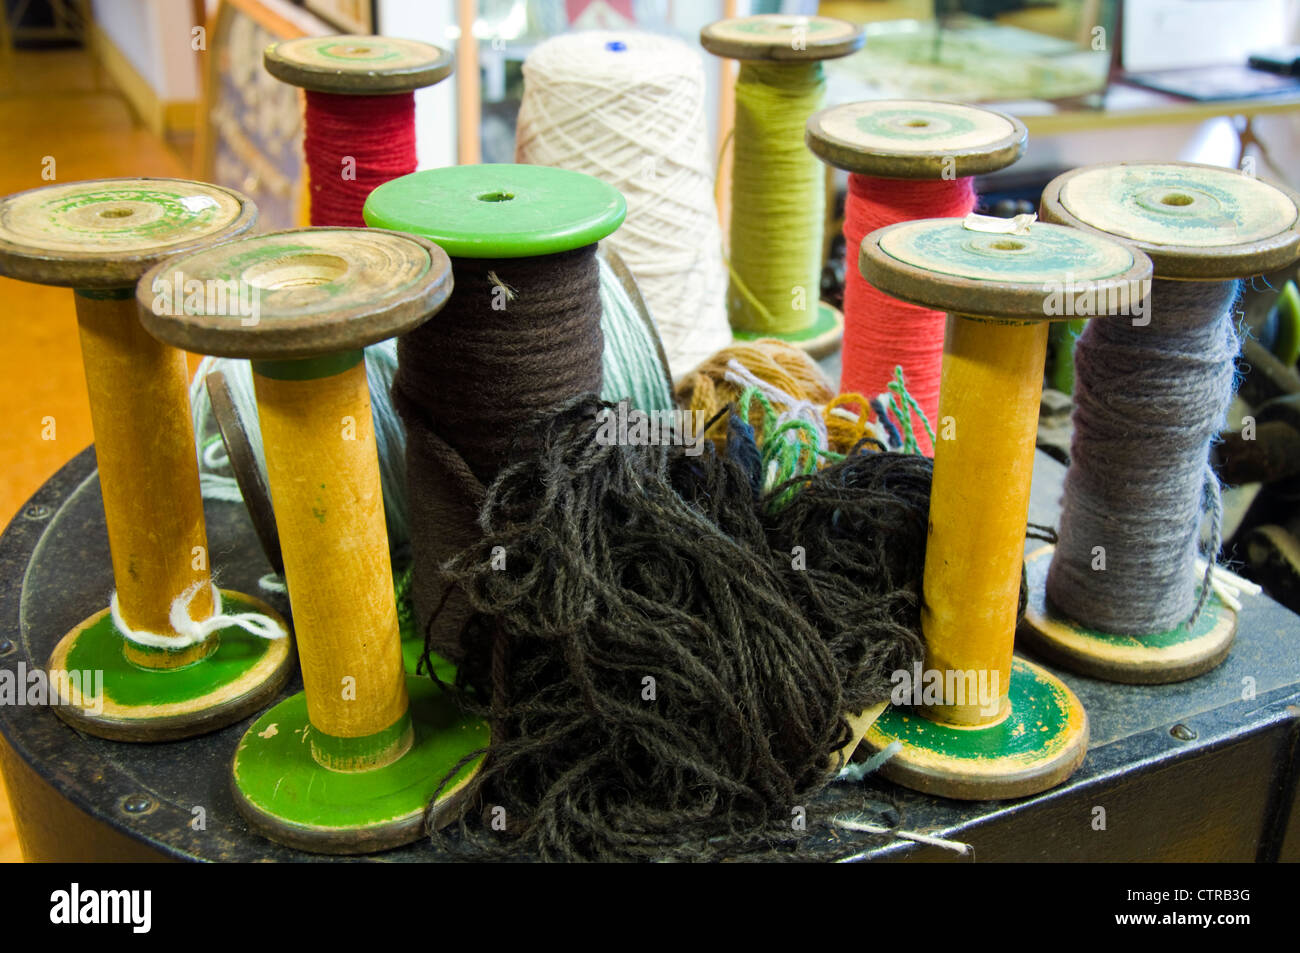 Yarn bobbin hi-res stock photography and images - Alamy